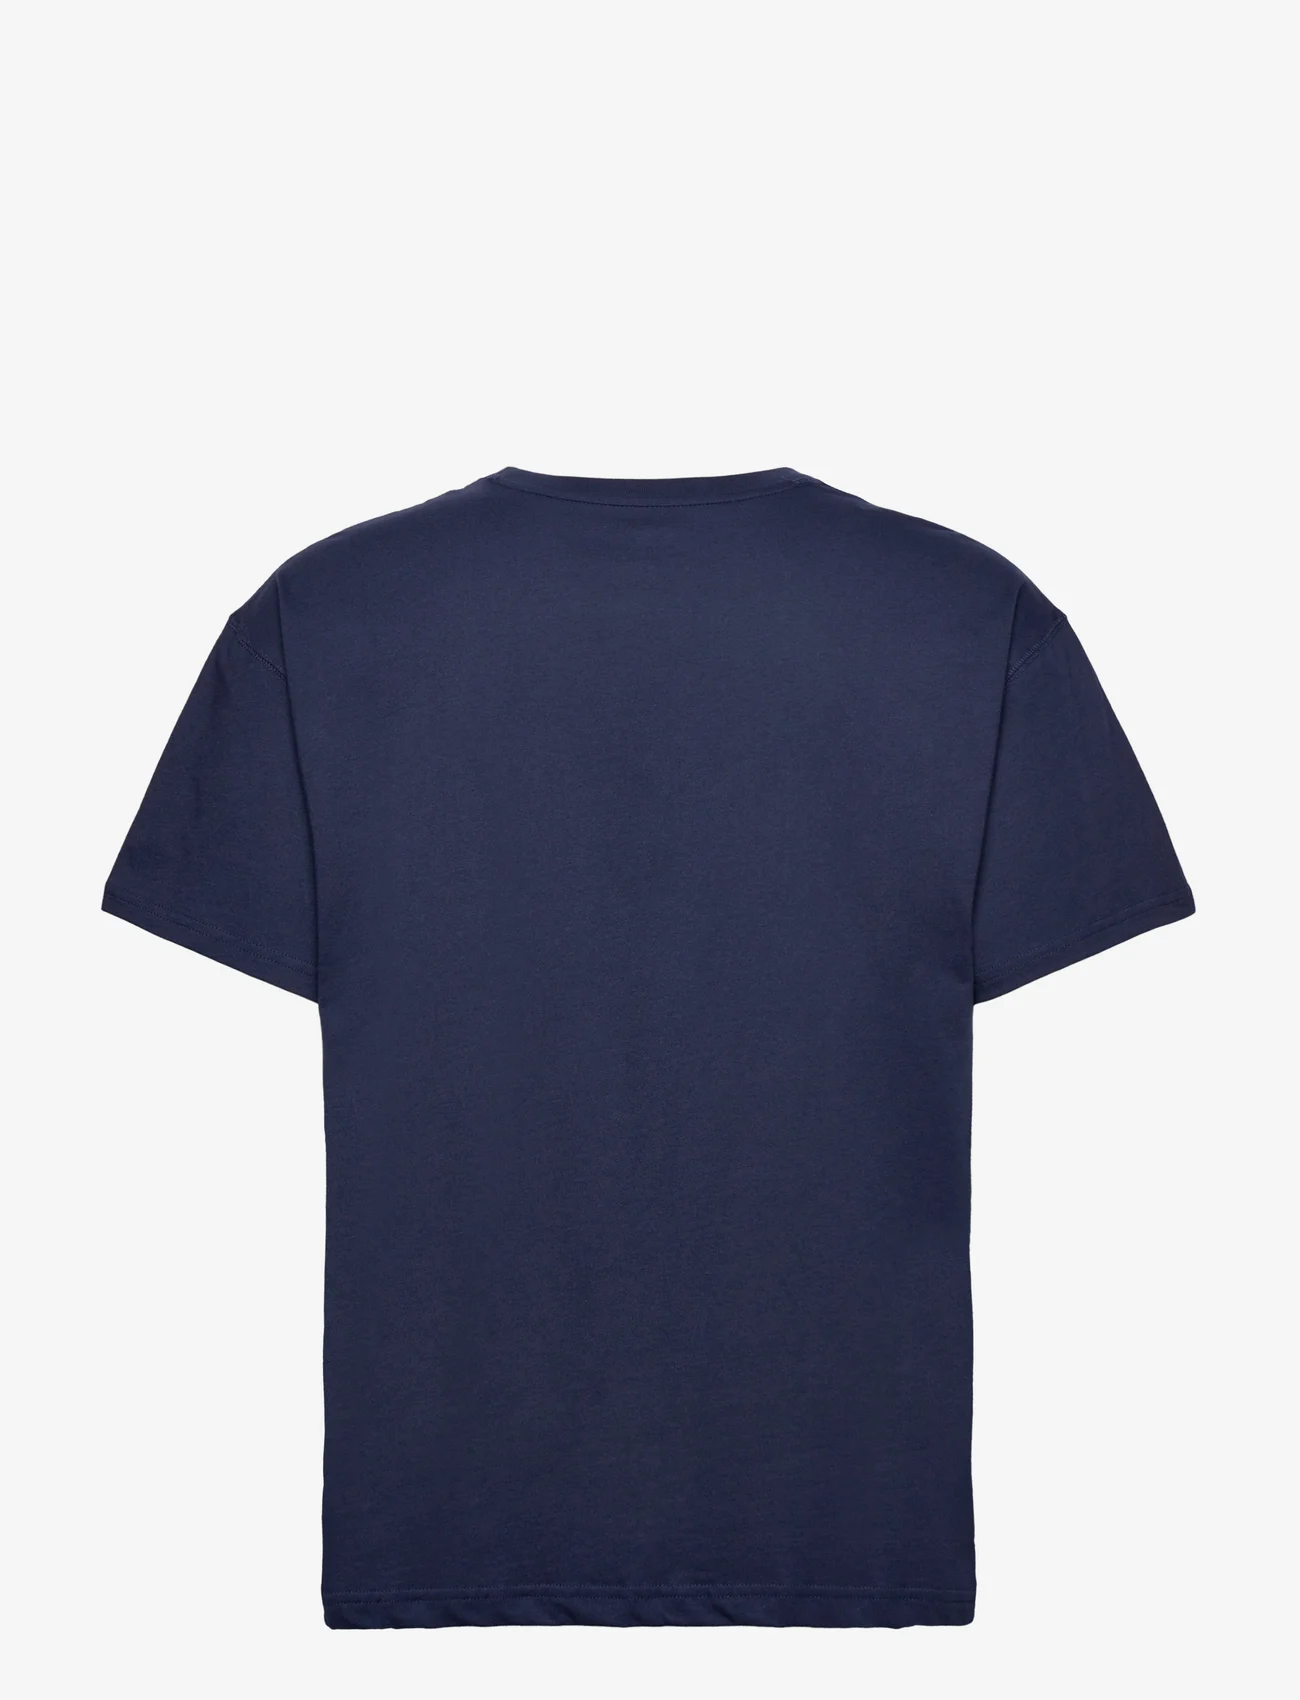 New Balance - Uni-ssentials Cotton T-Shirt - lowest prices - natural indigo - 1